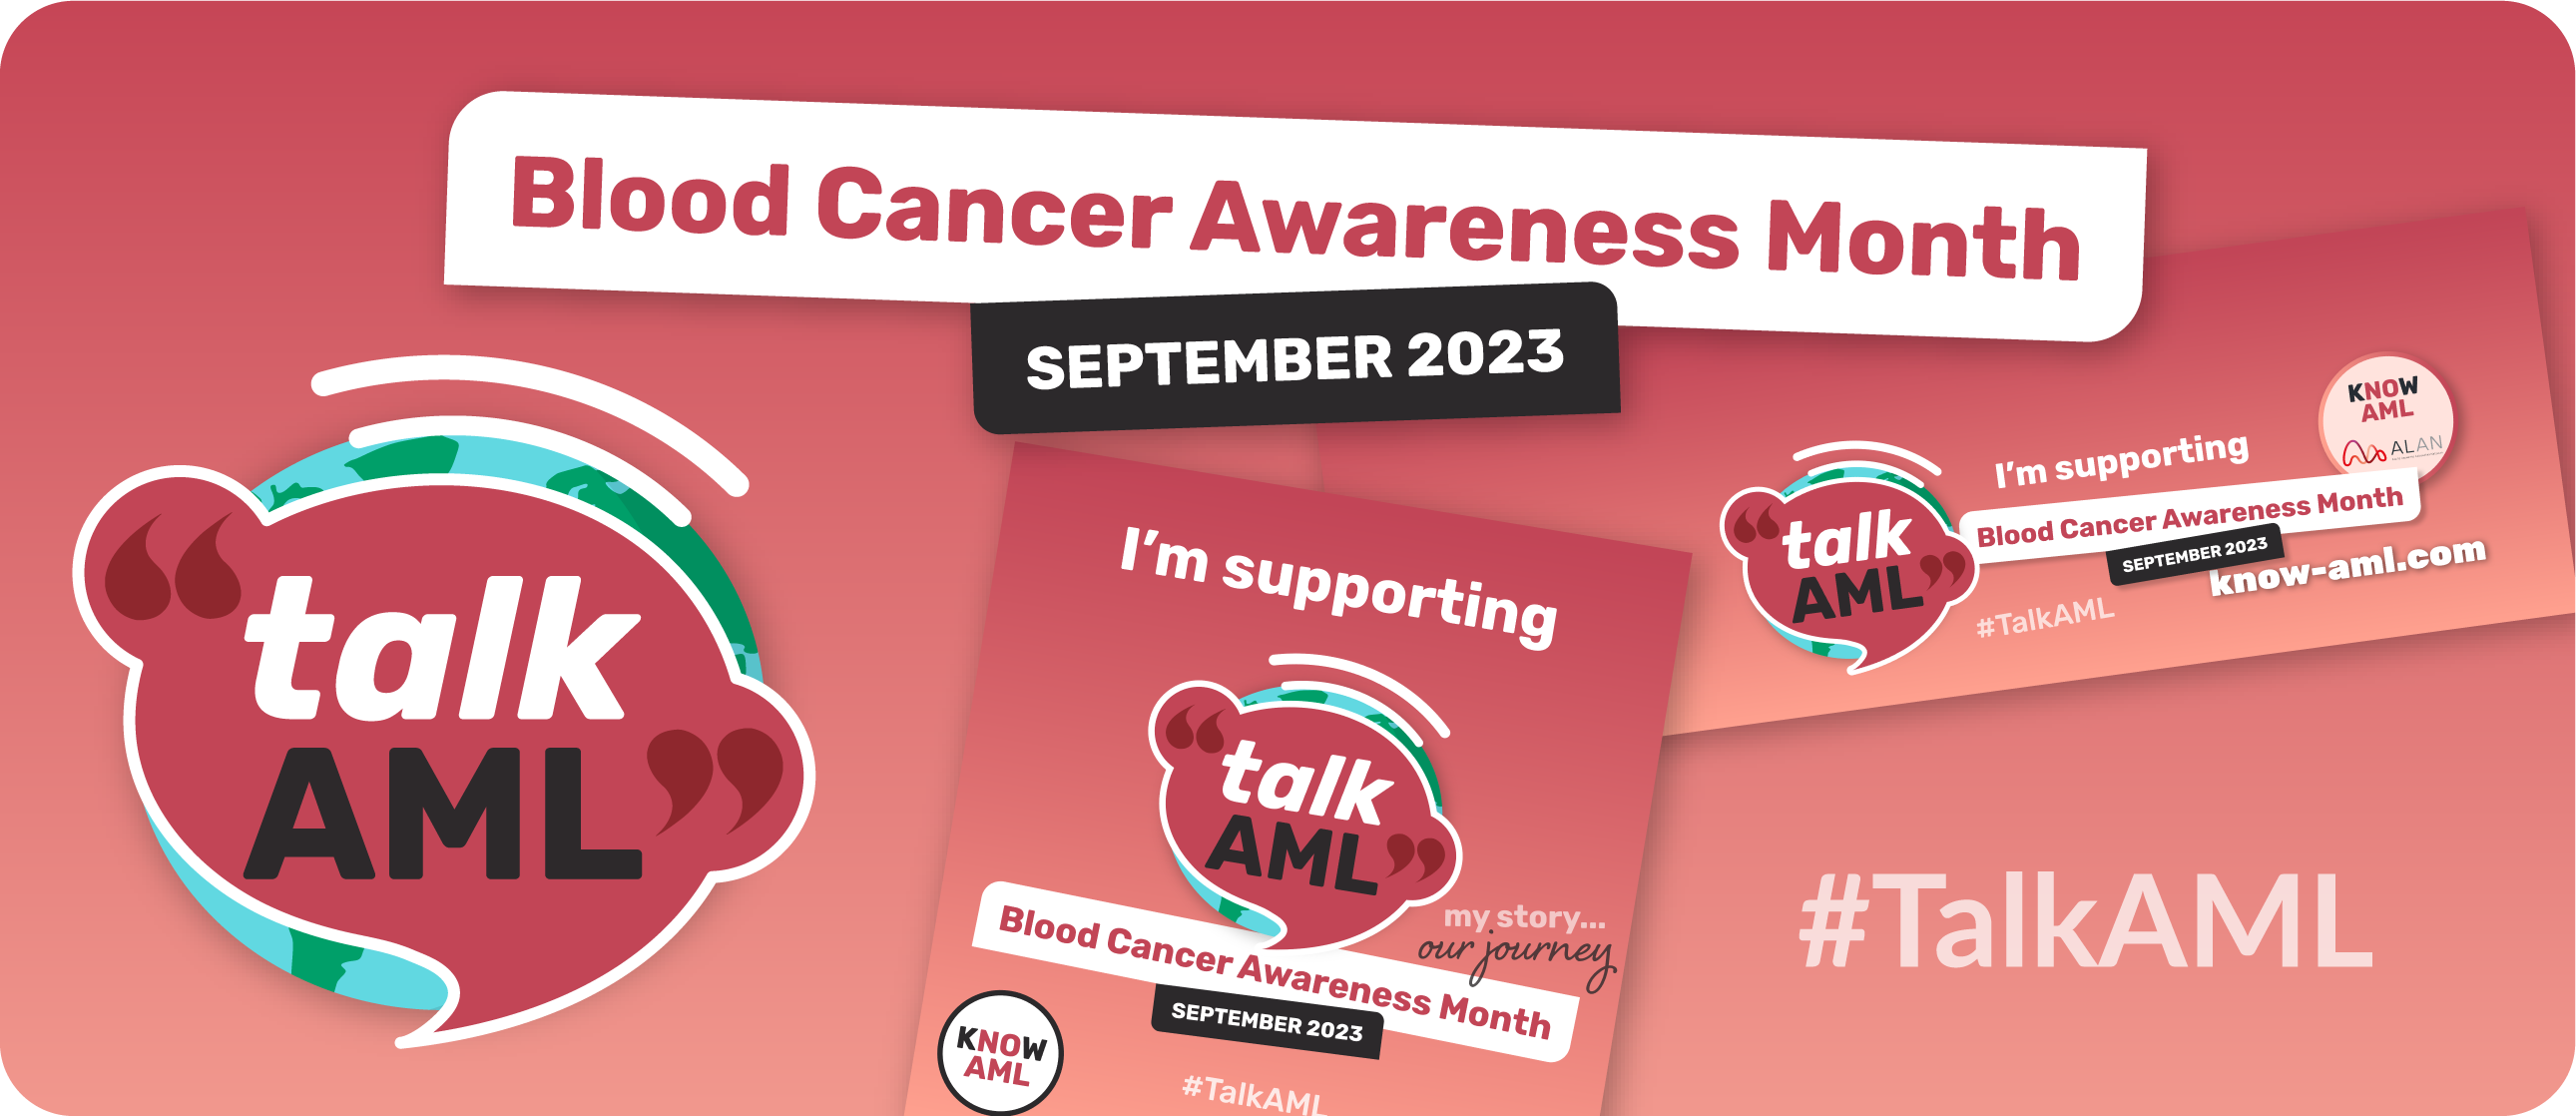 Blood Cancer Awareness Month 2023 #TalkAML